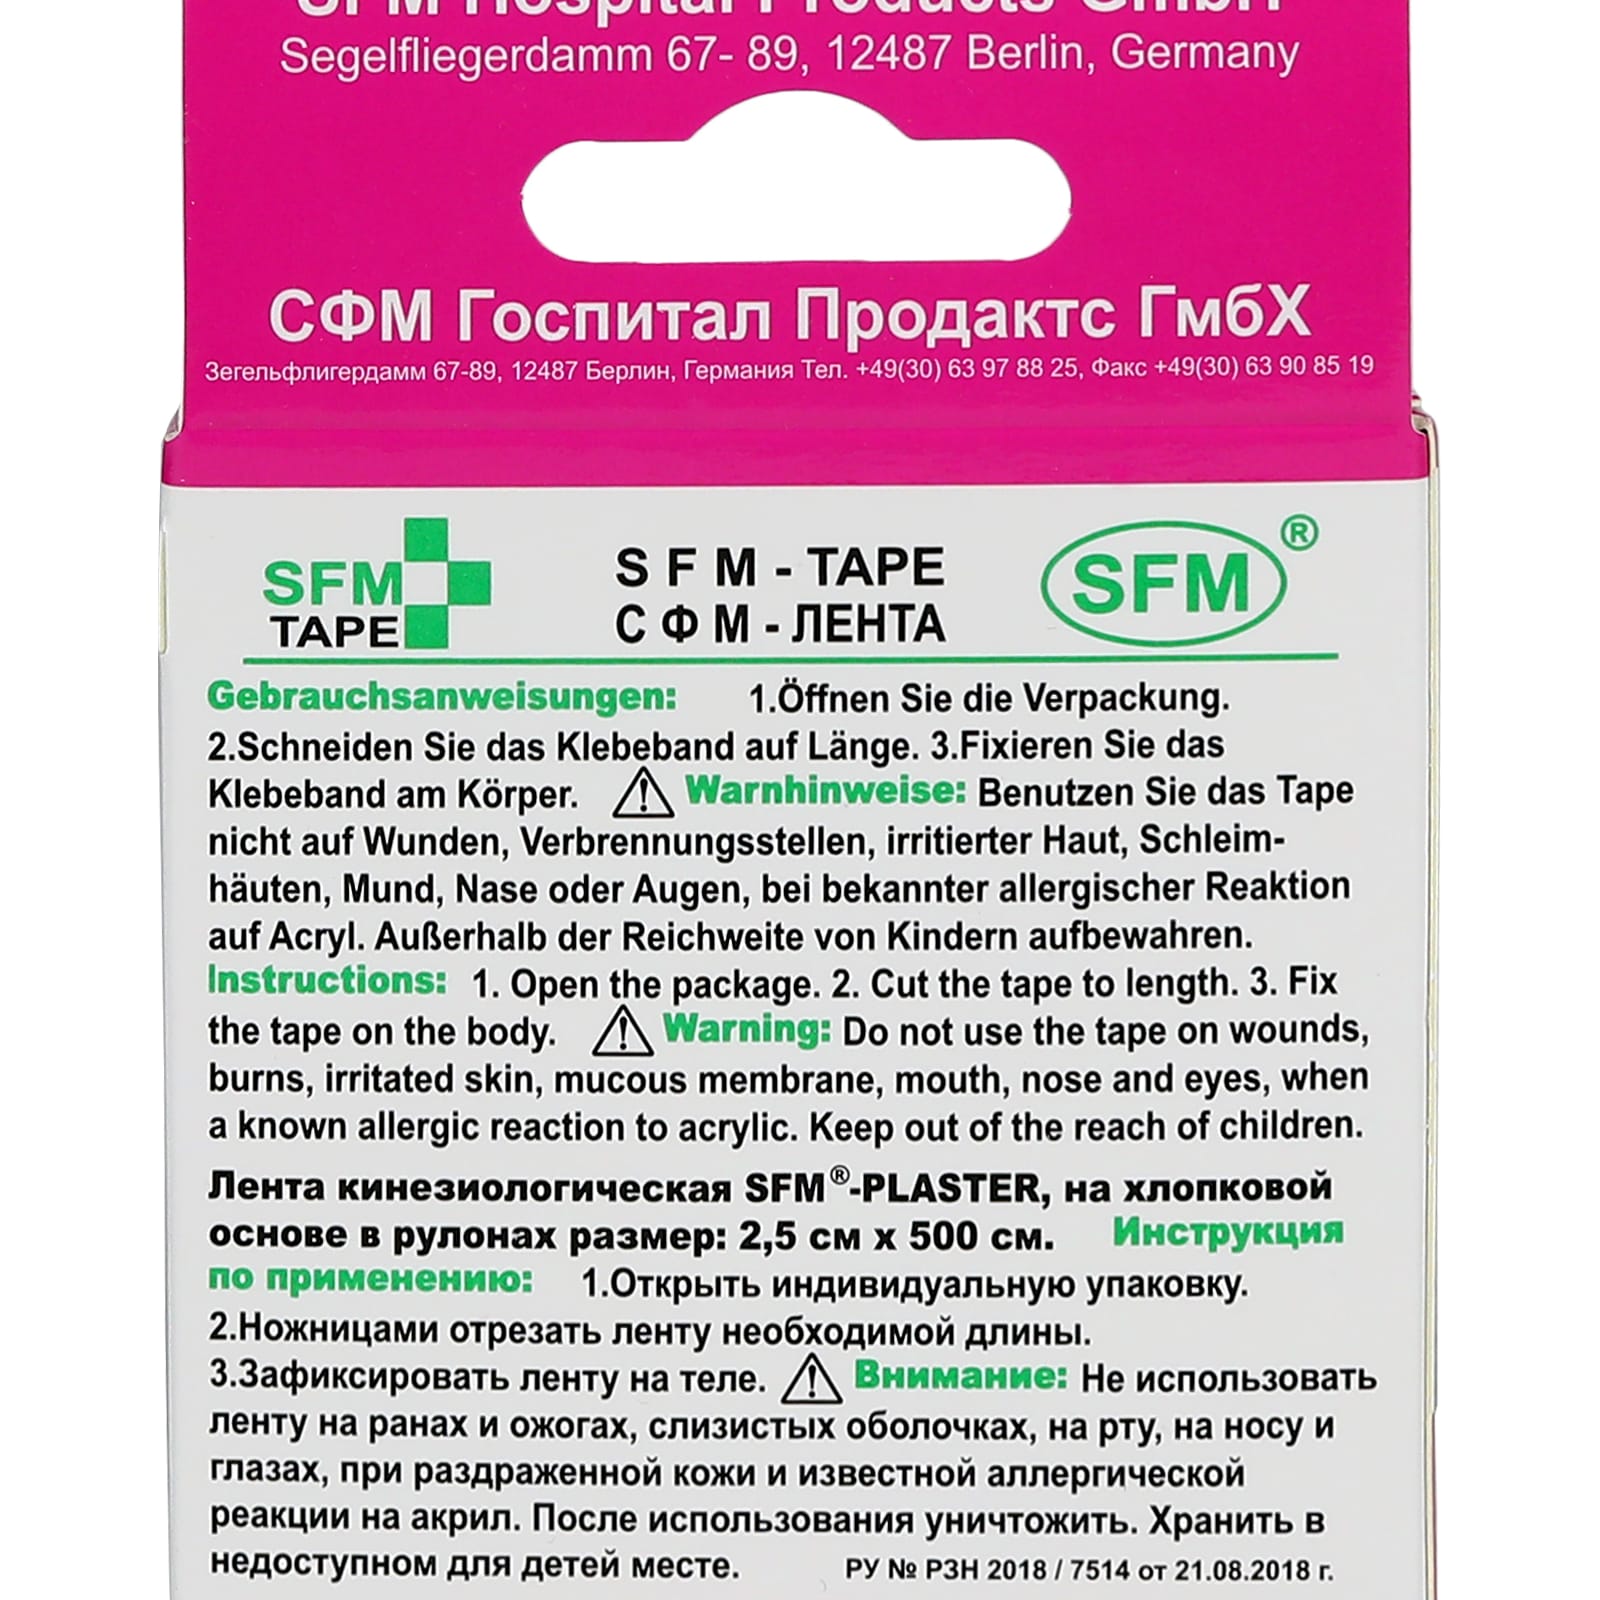 Кинезиотейп SFM Hospital Products Plaster на хлопковой основе 2.5х500 см розового цвета в диспенсере - фото 4